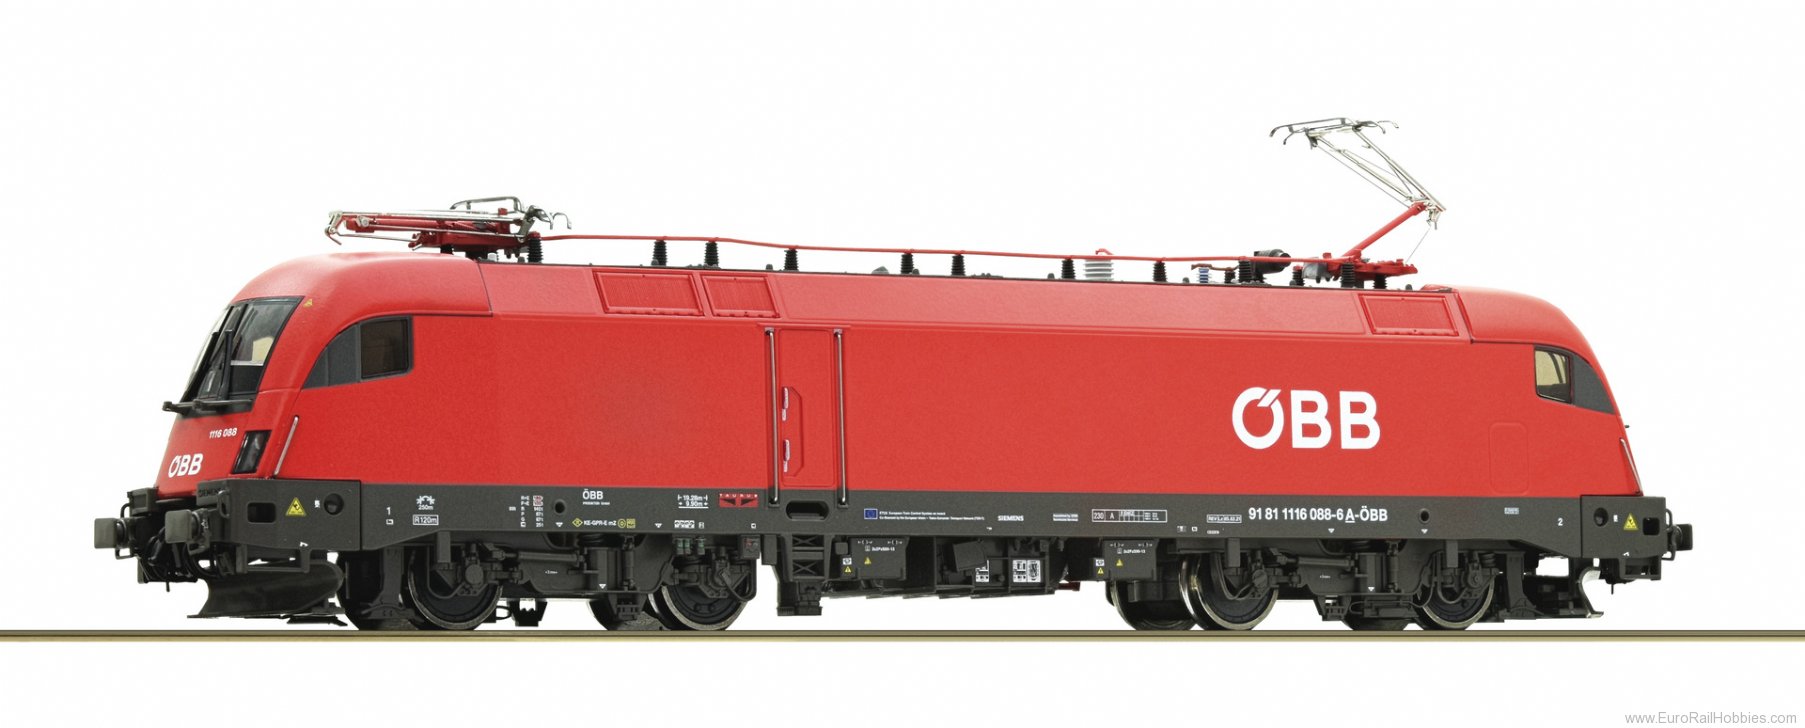 Roco 70526 Electric locomotive 1116 088-6 ÃBB 